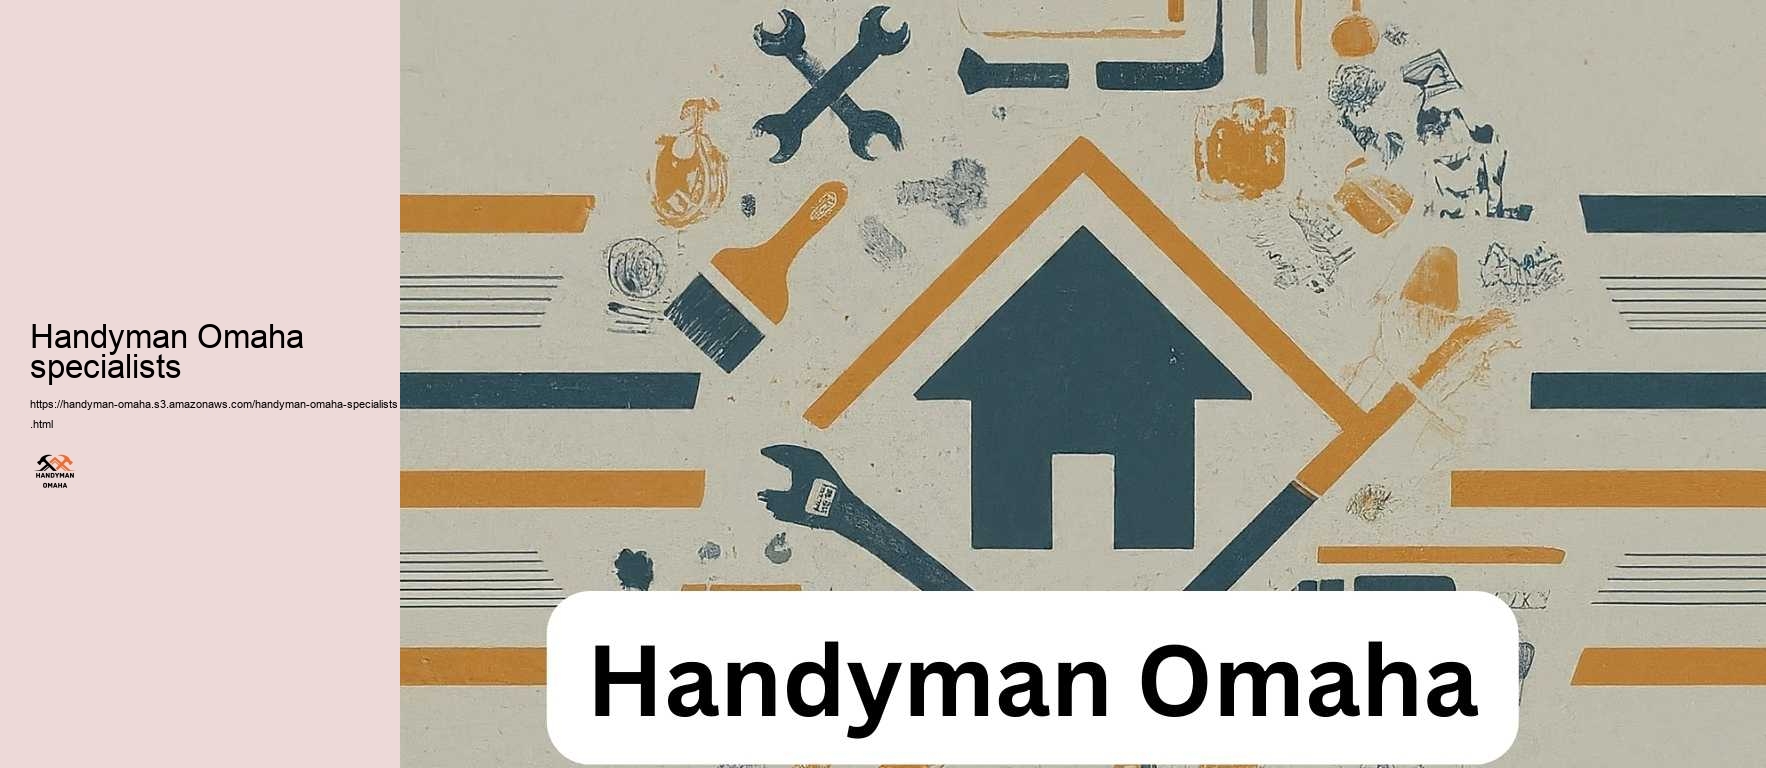 Handyman Omaha specialists